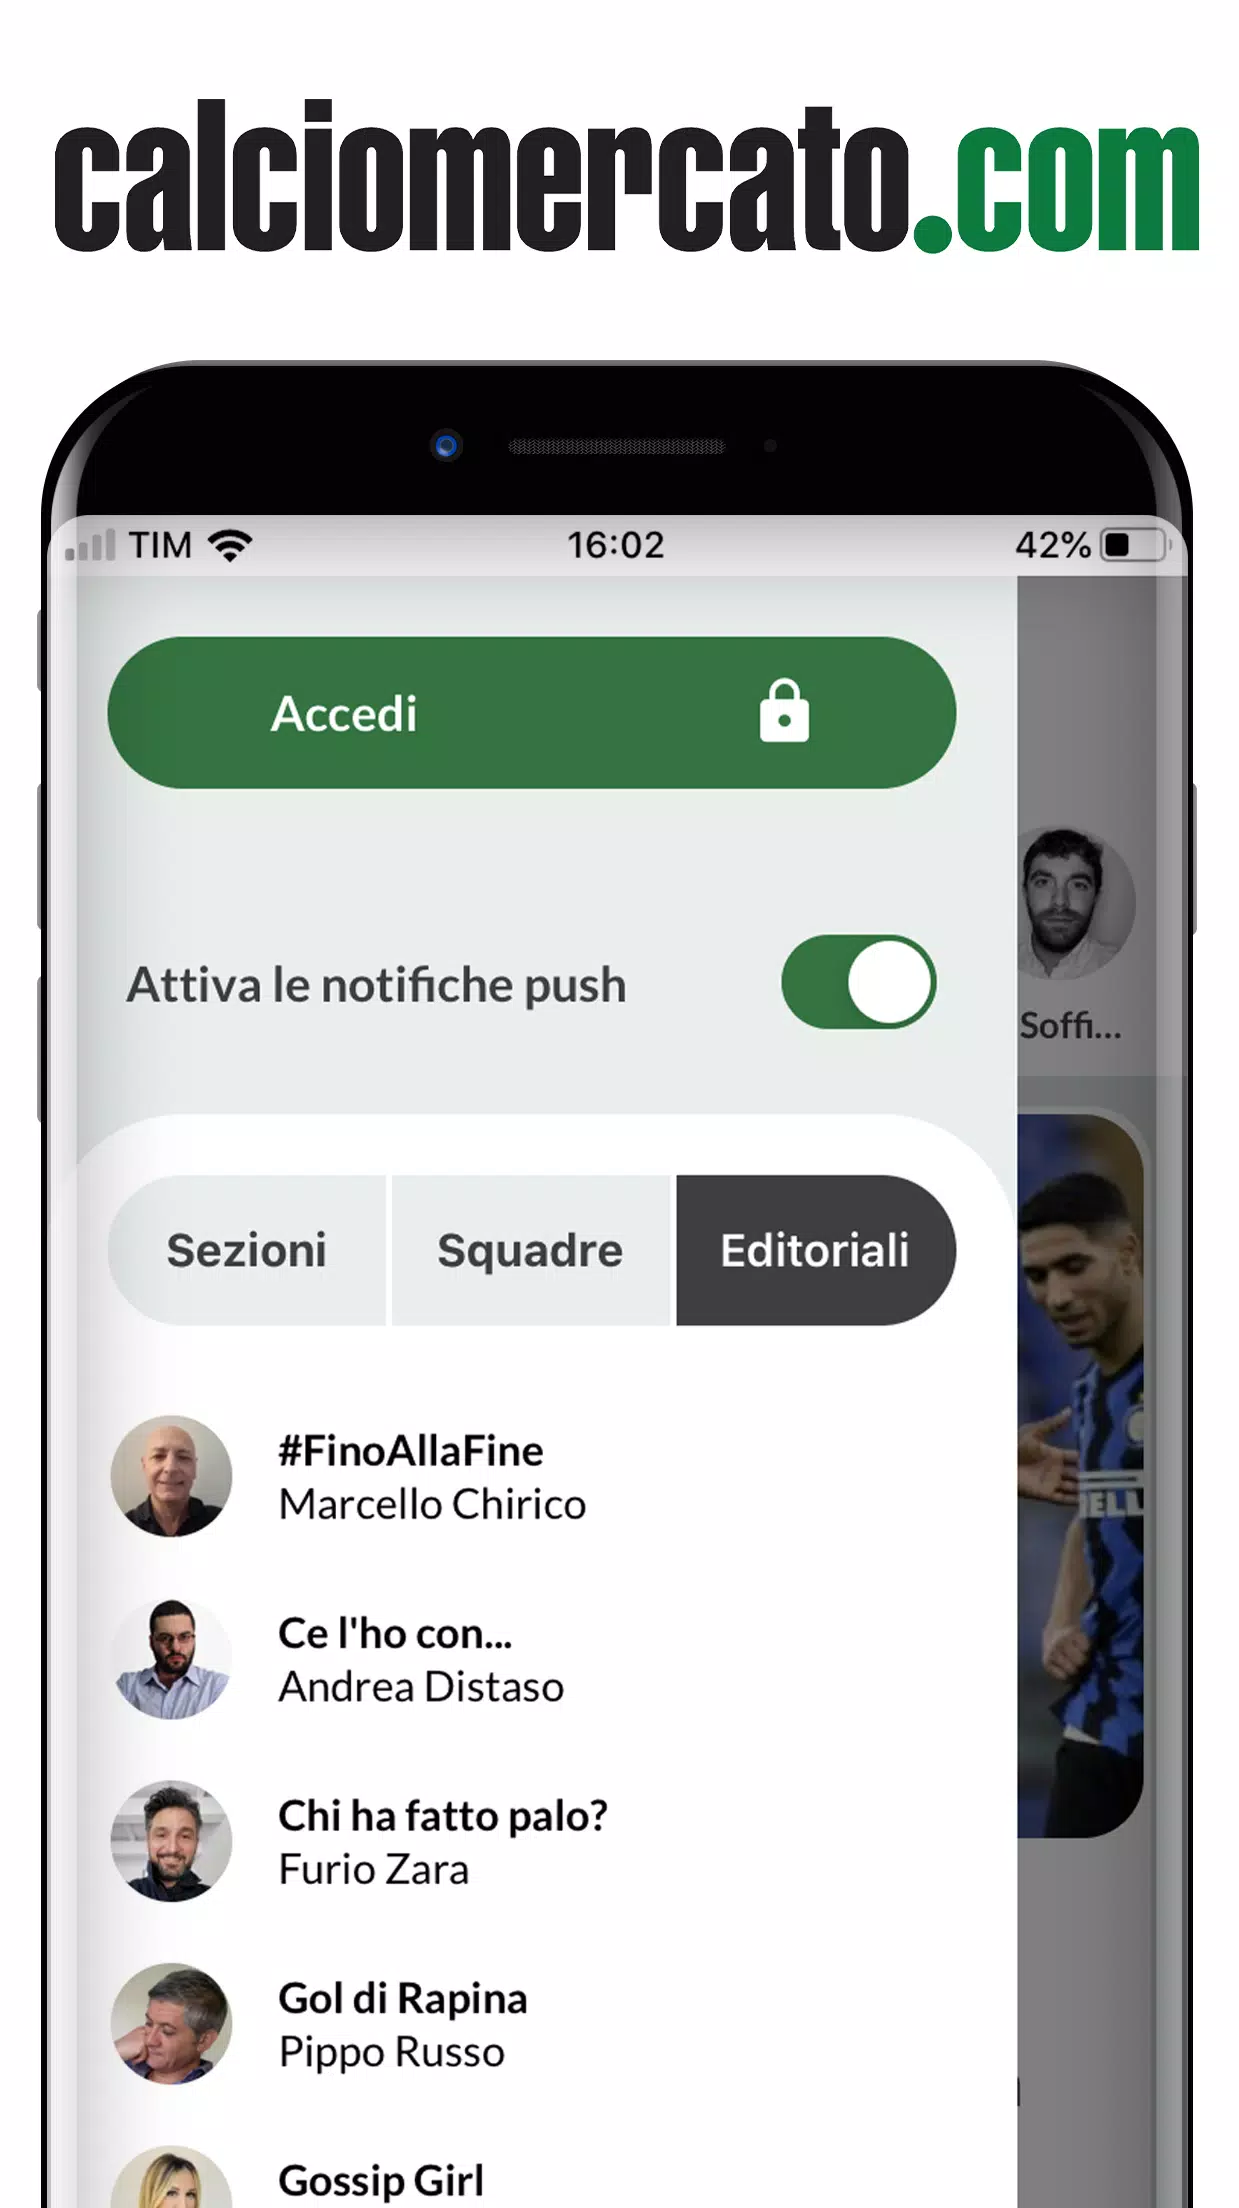 Calciomercato.com for Android - APK Download